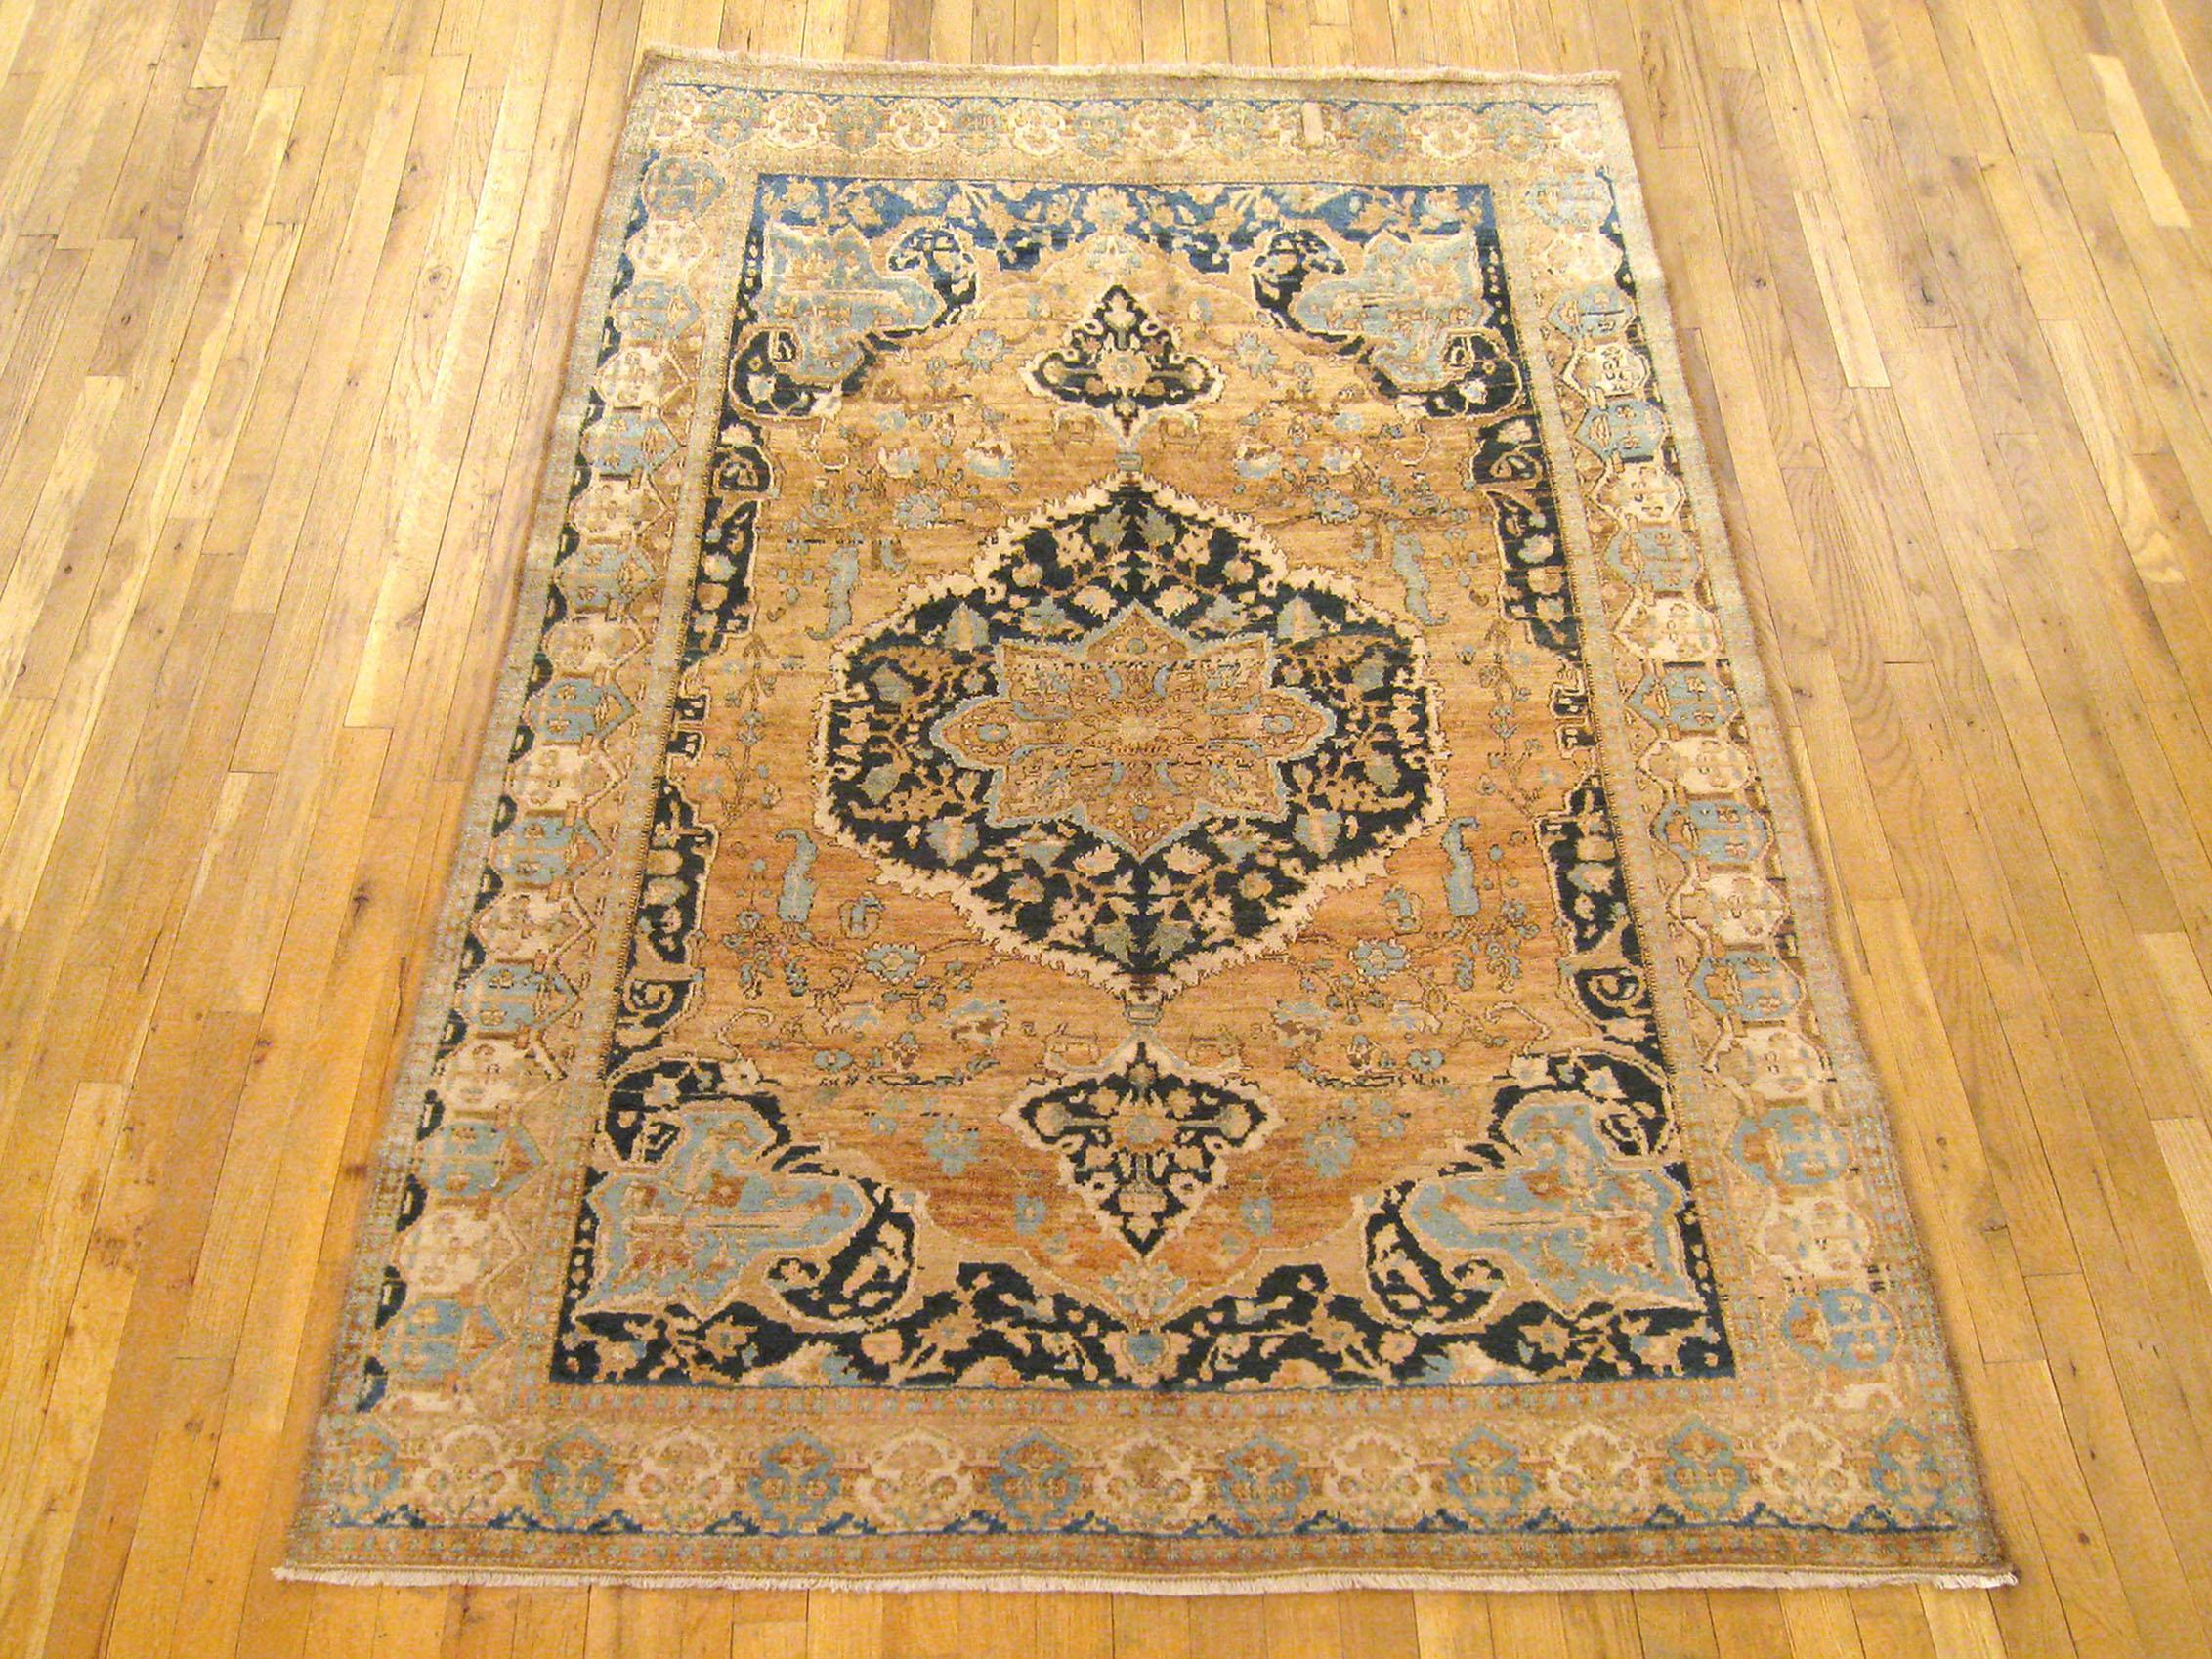 Antique Persian Seneh Oriental Rug, in Small size

An antique Persian Seneh oriental rug, size 6'0